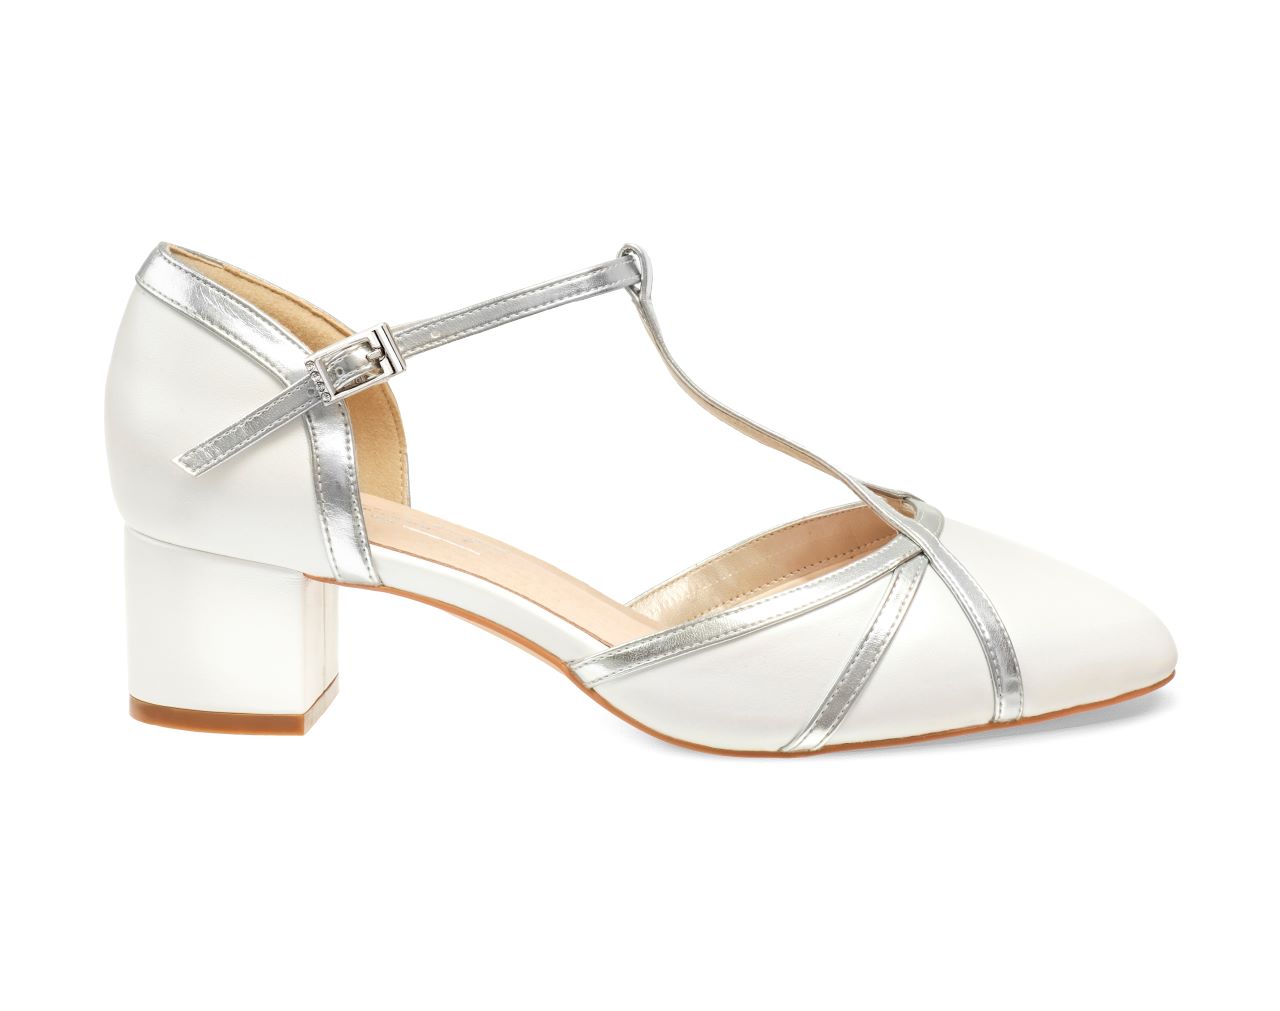 Doris 'Leather' Bridal shoe- gwesterleigh.com